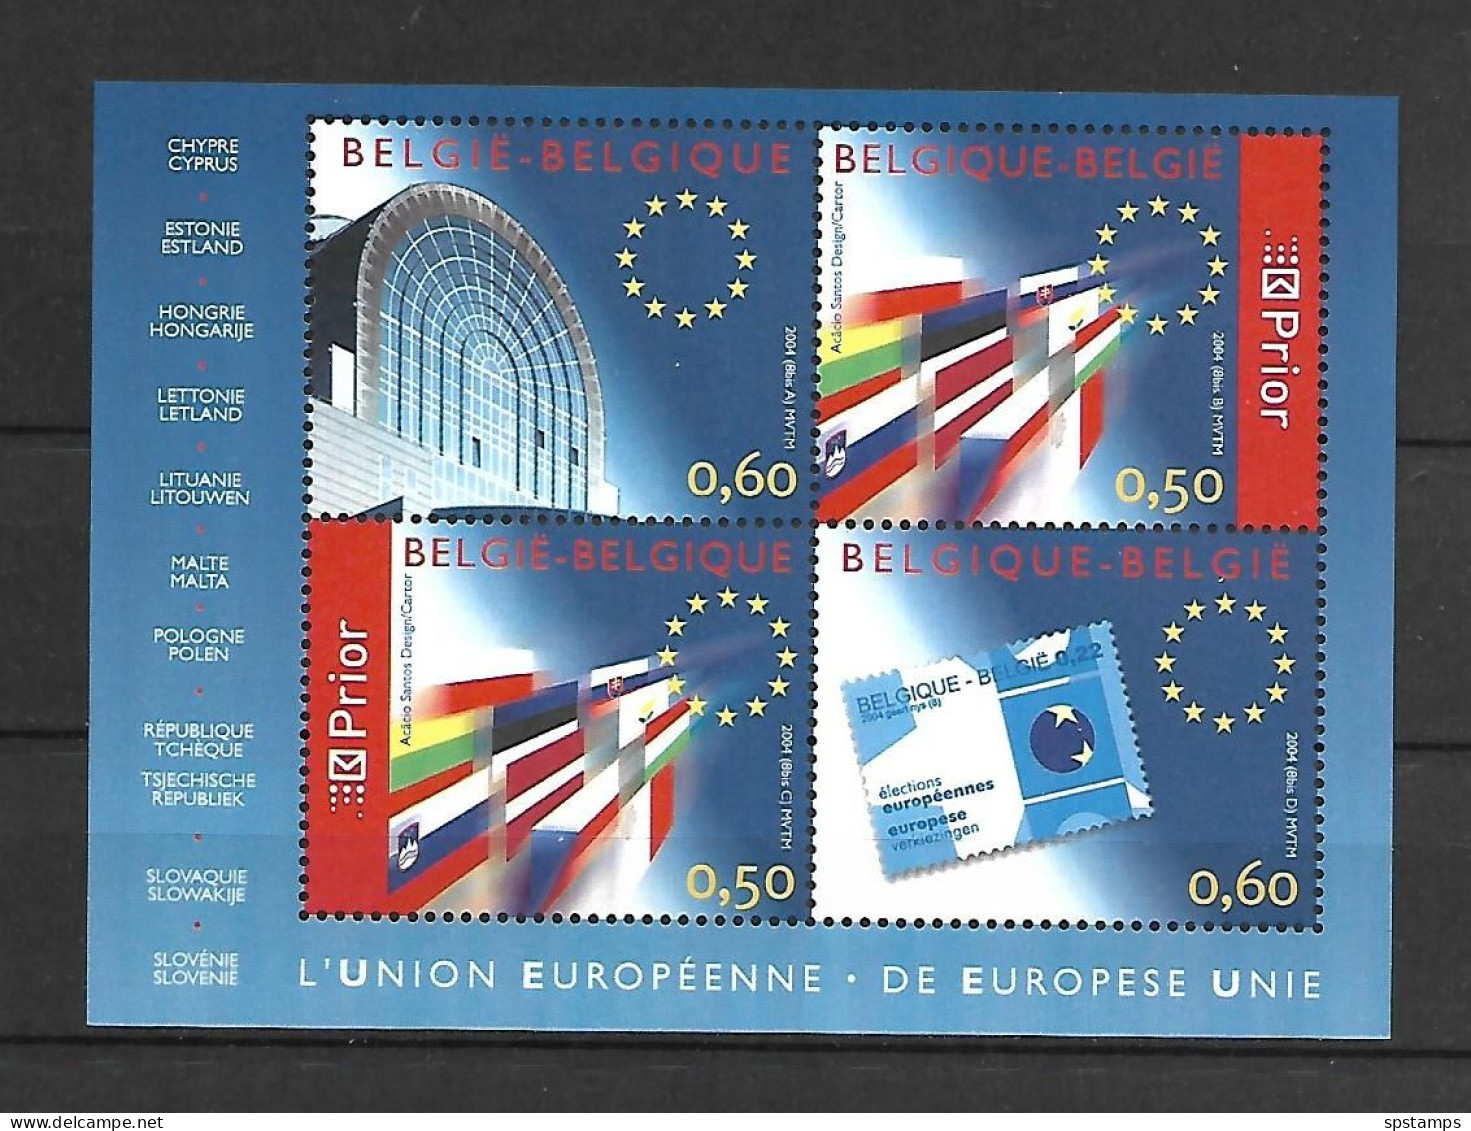 Belgium 2004 The European Union - The 10 New Members MS MNH - European Ideas